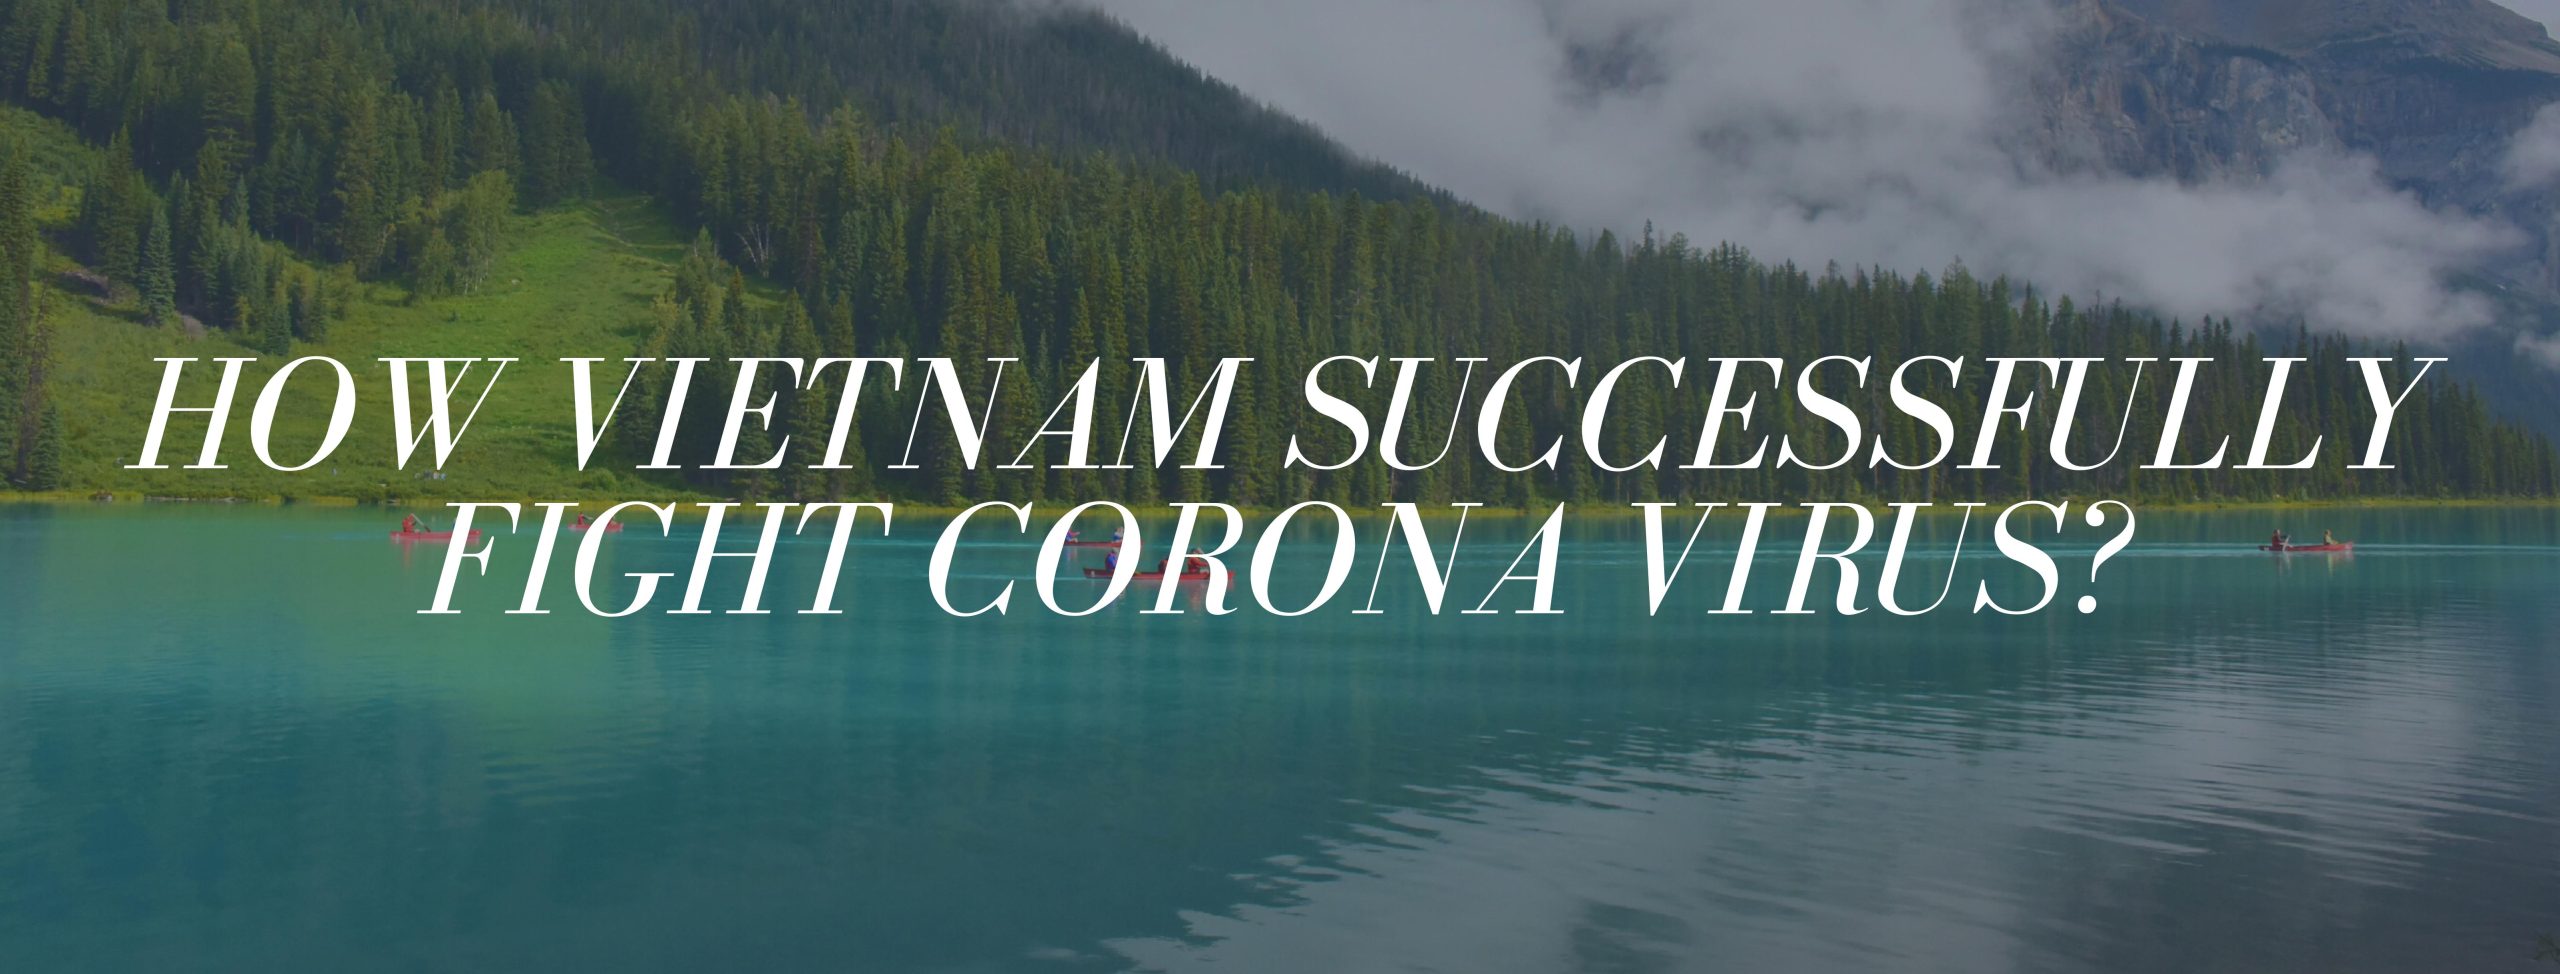 How VIETNAM Successfully Fight Corona Virus?